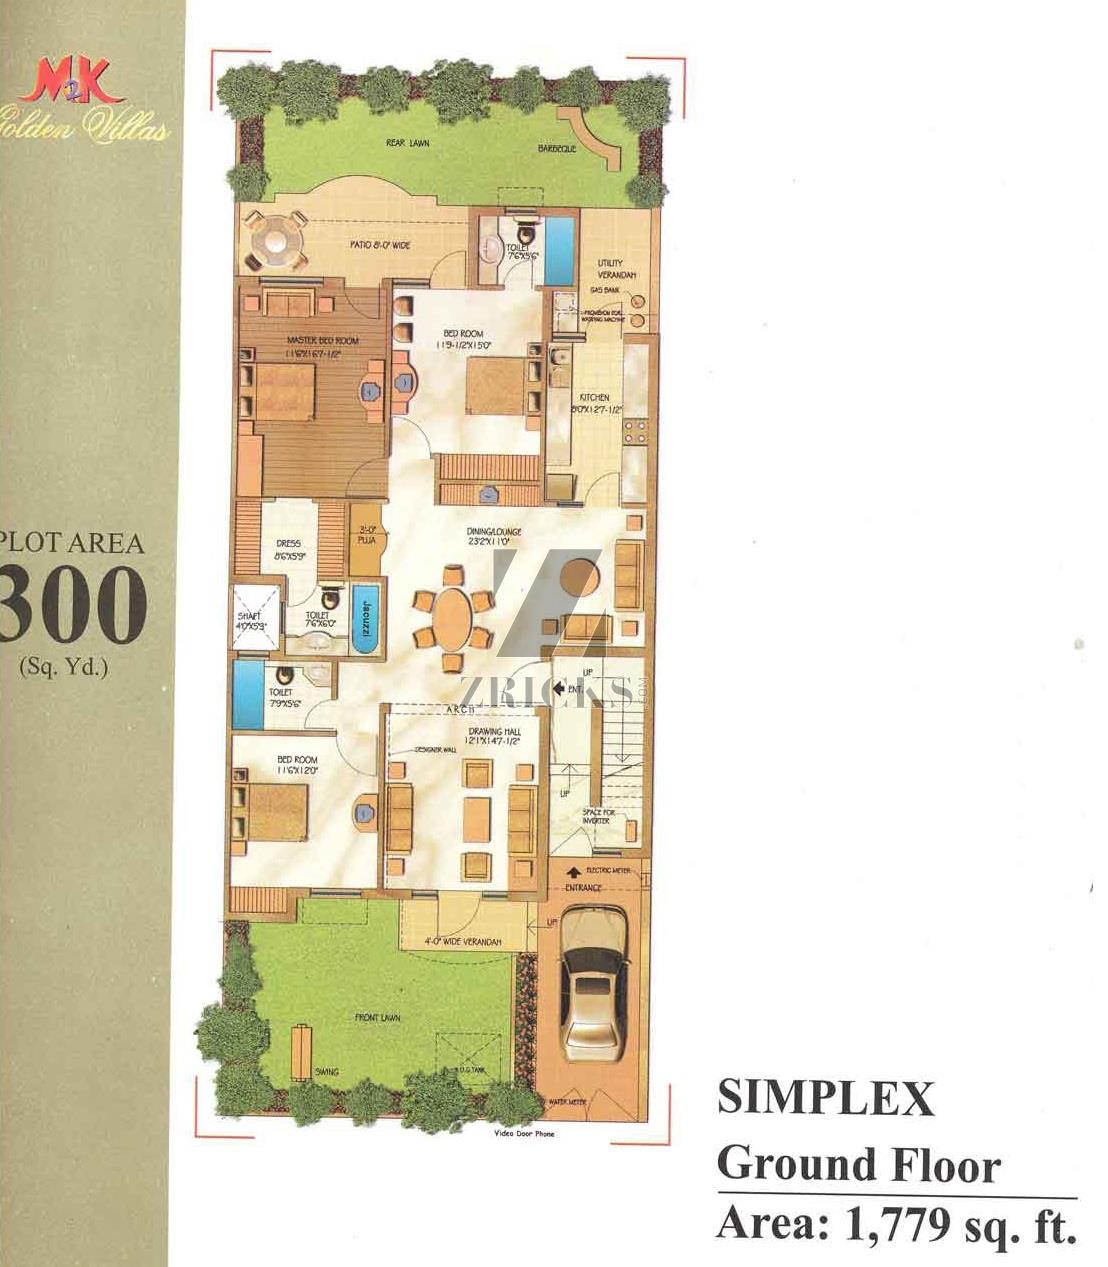 M2K Golden Villas Floor Plan